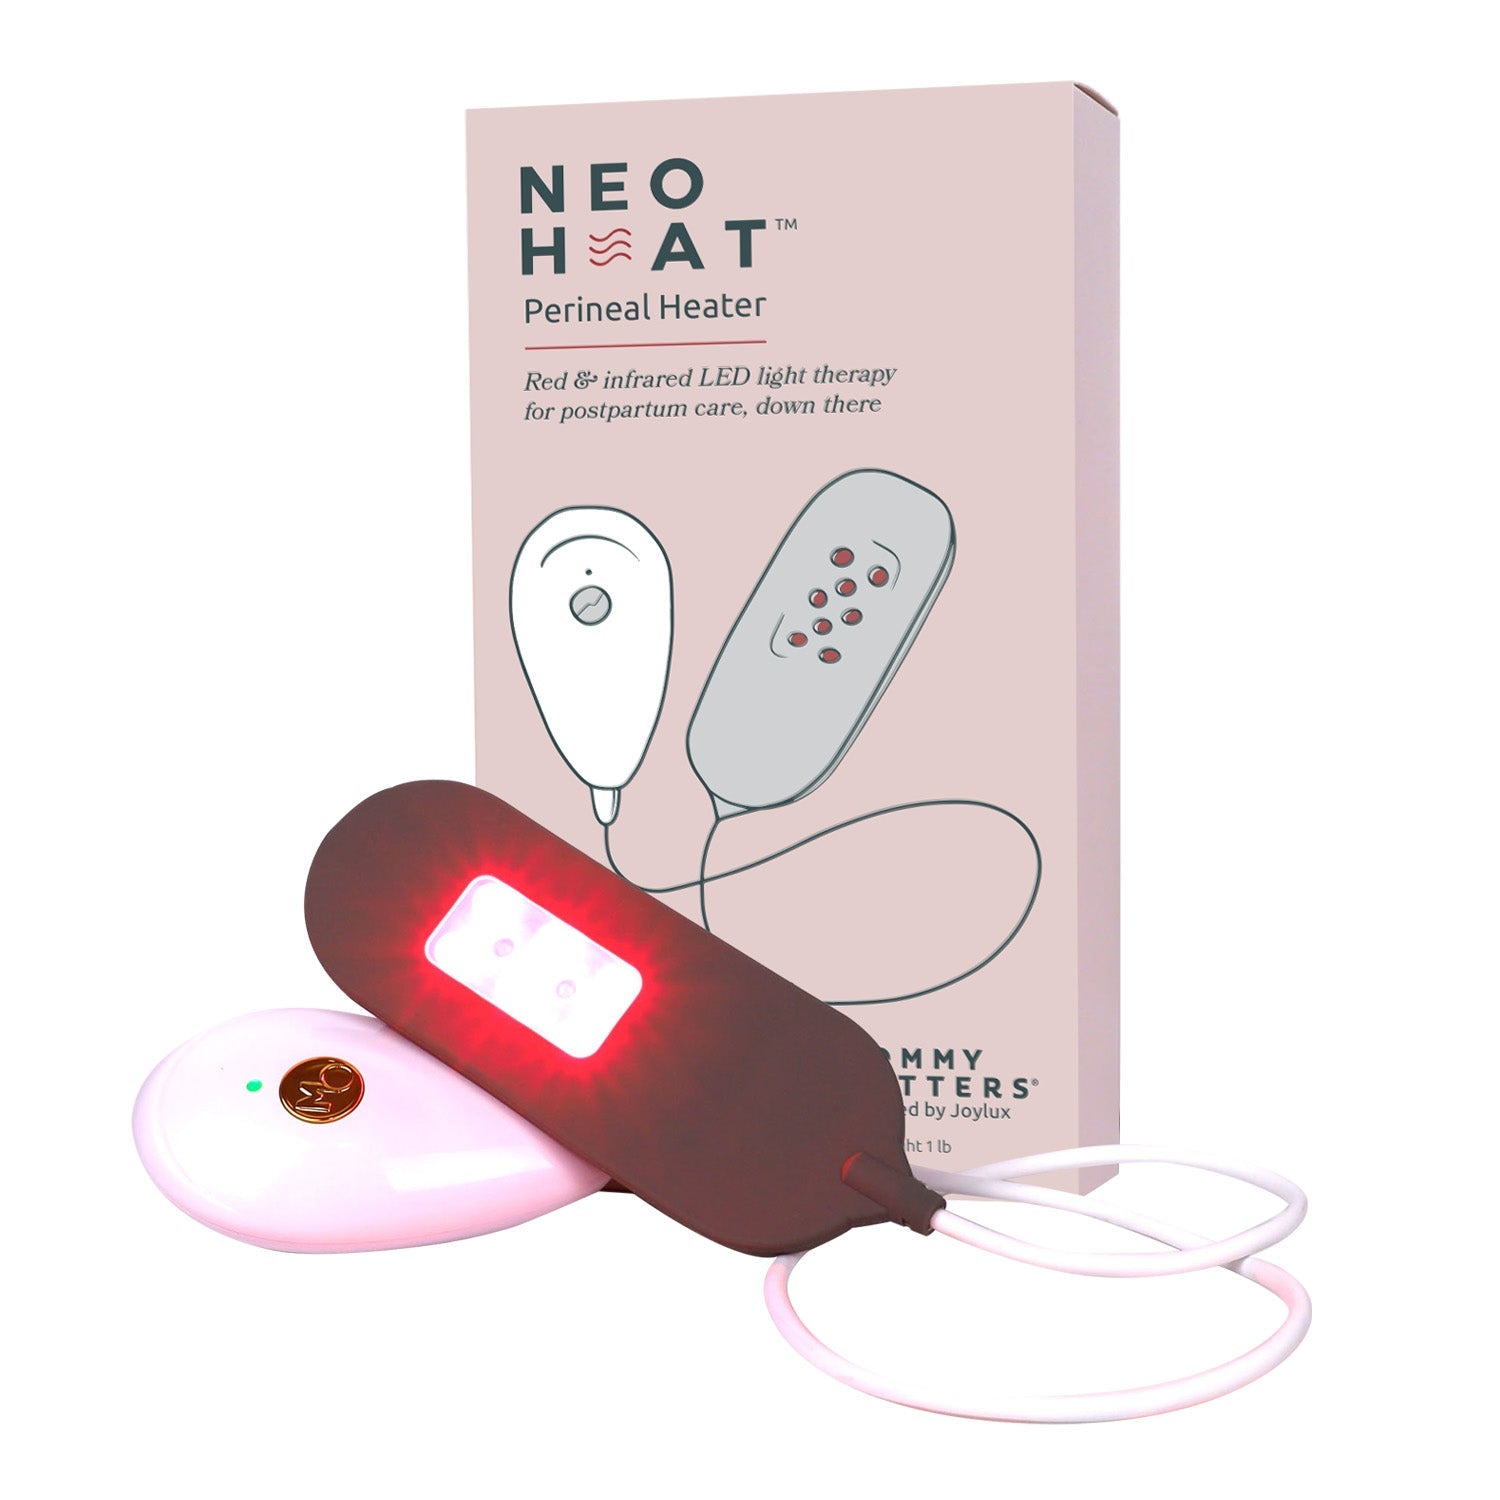 NeoHeat Perineal Heater - Joylux